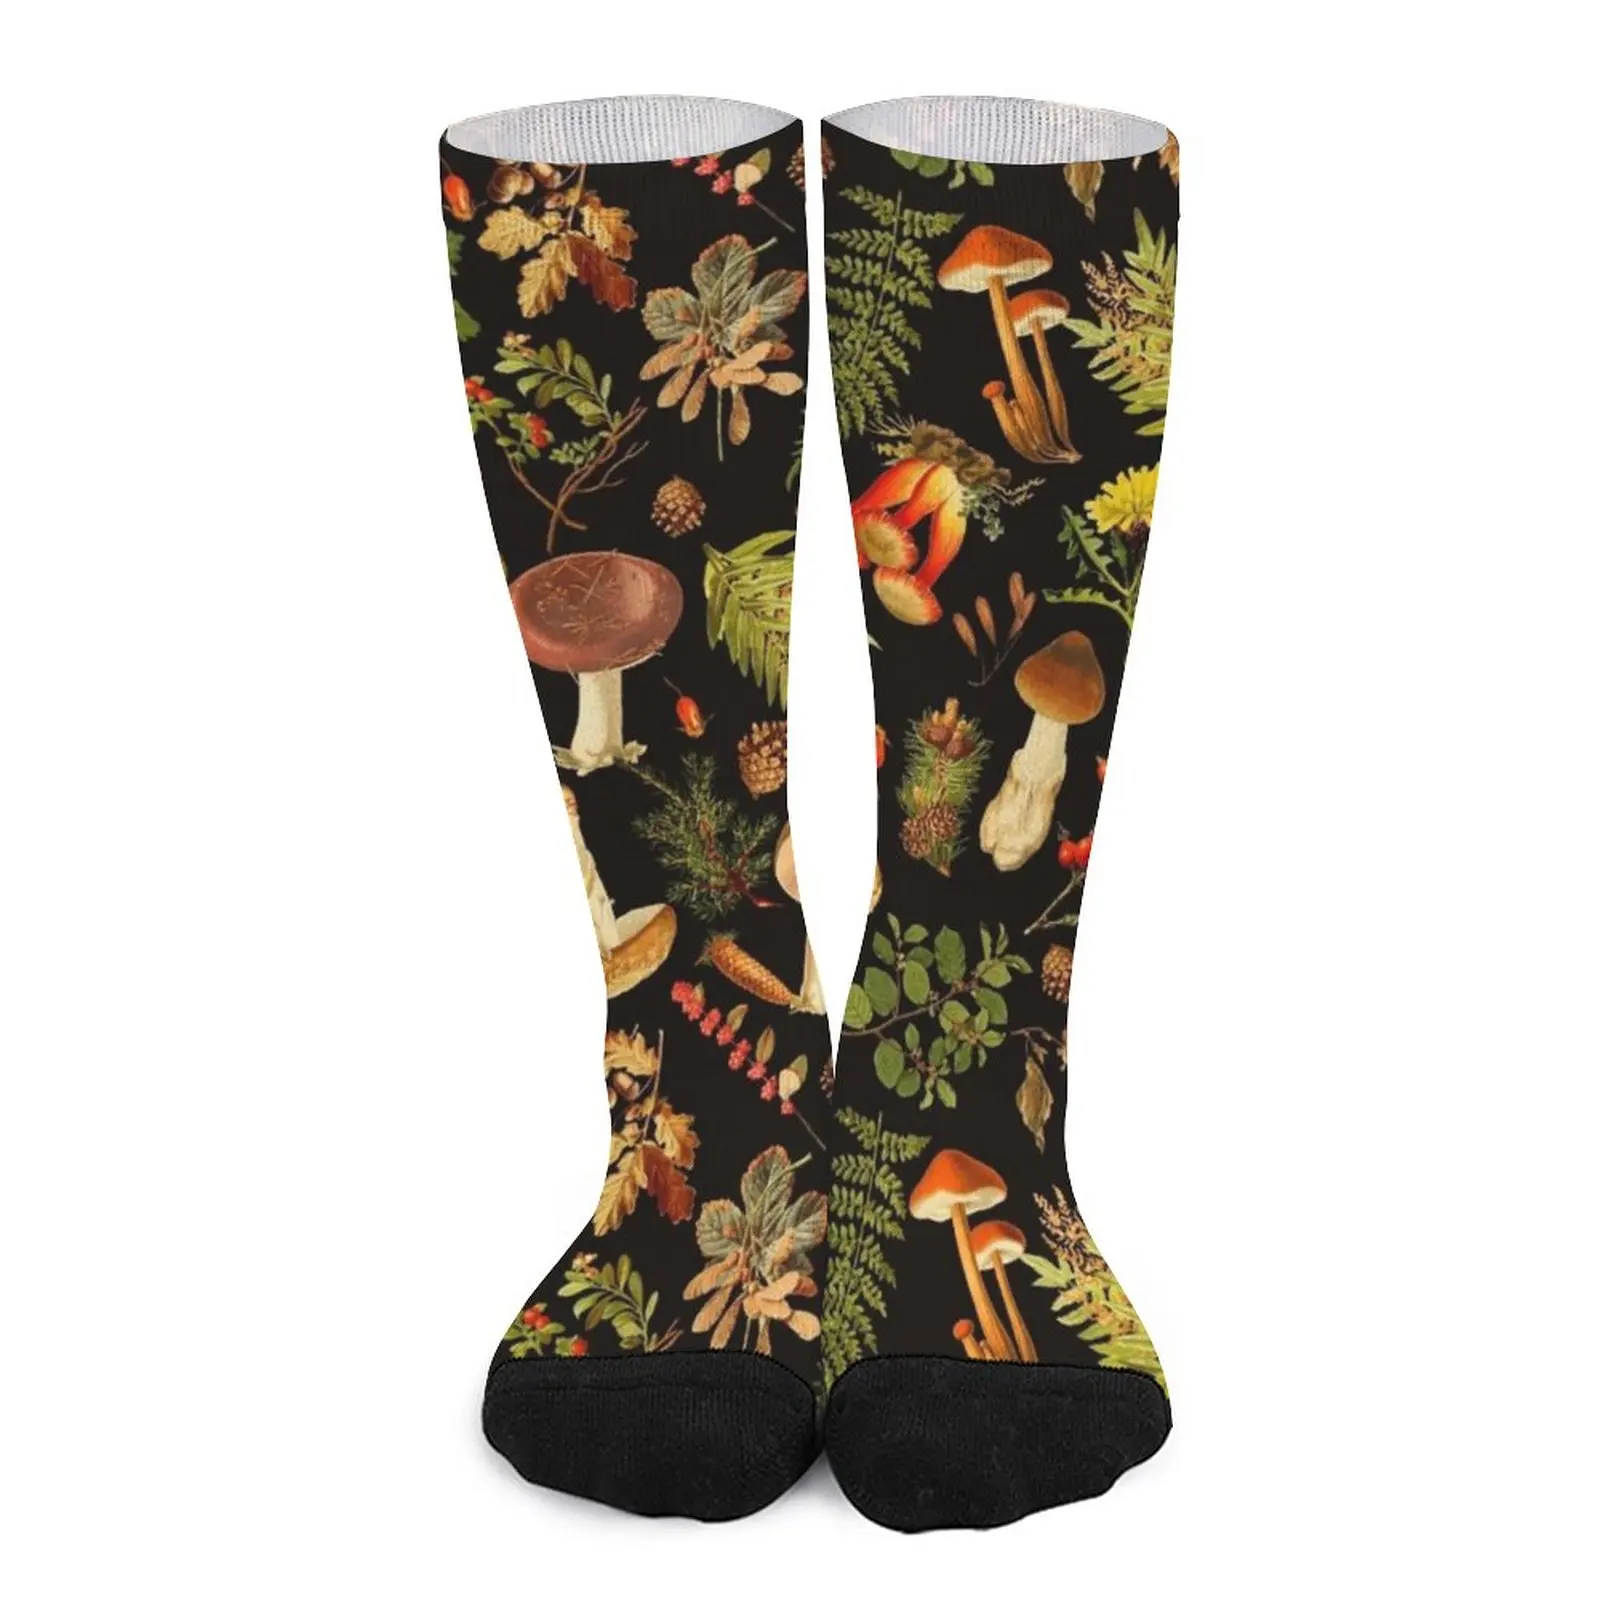 Vintage toxic mushrooms forest pattern on black Socks Women's compression socks sock men fire in the hole socks black socks compression stockings socks men s